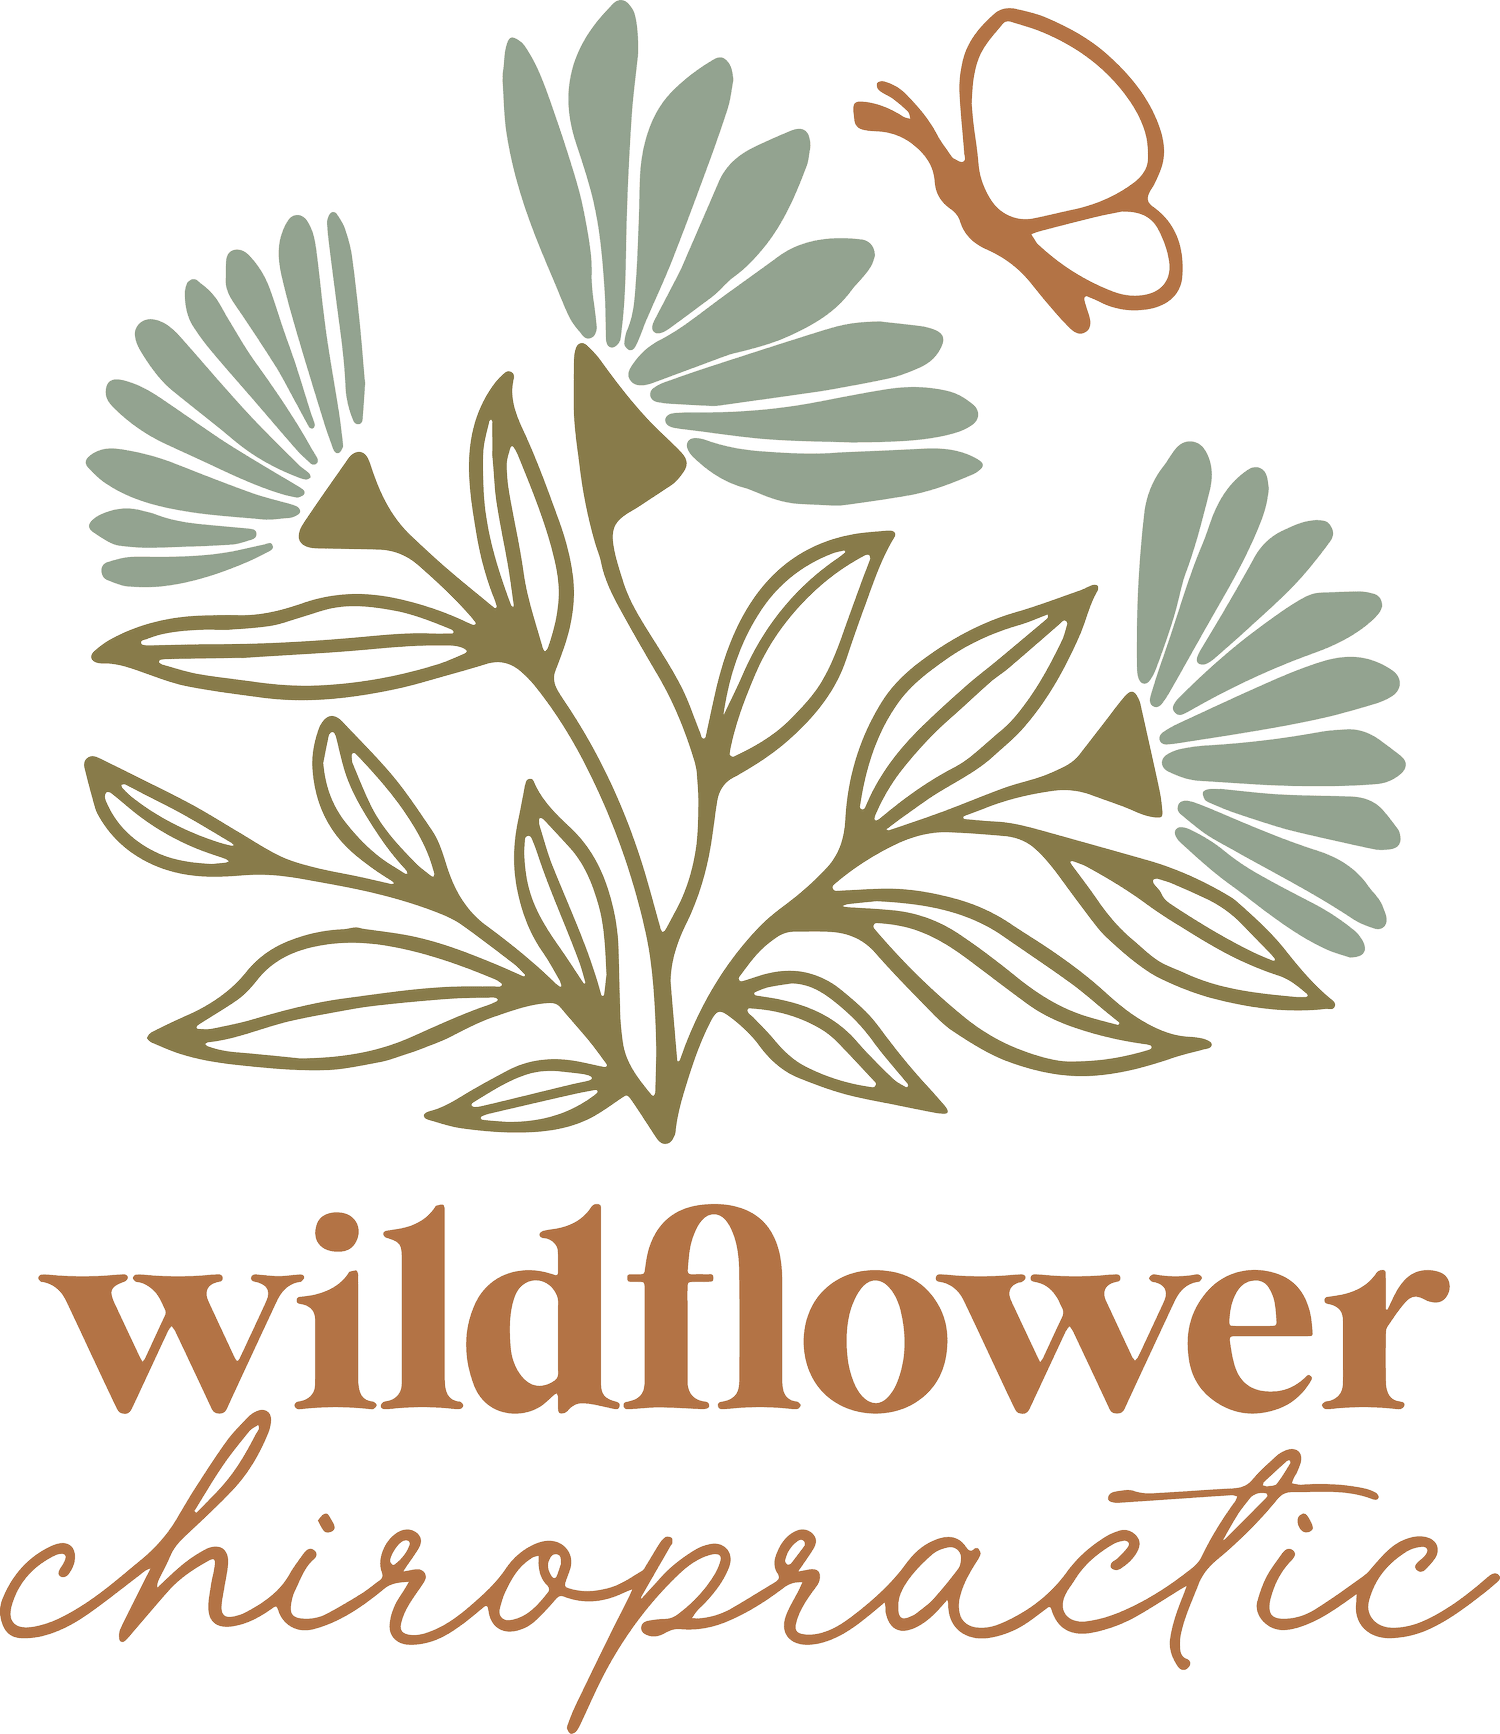 Wildflower Chiropractic